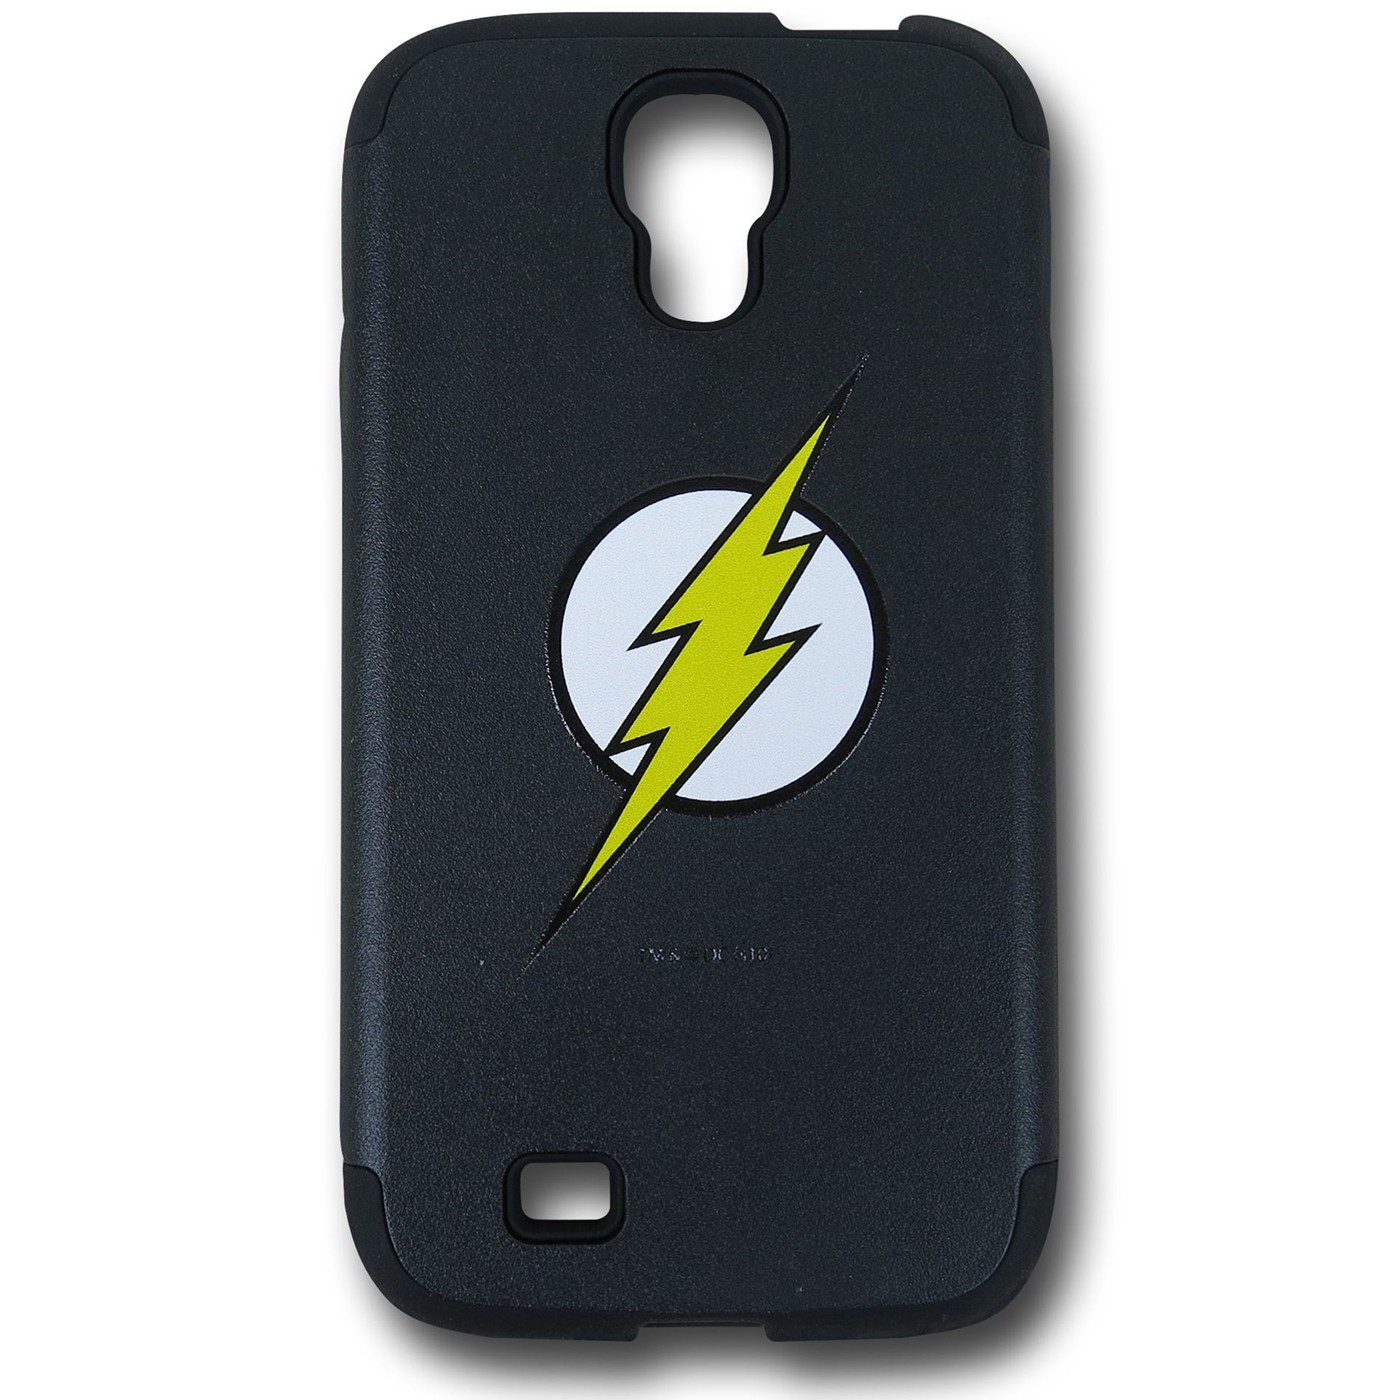 Flash Symbol Galaxy S4 Black Guardian Case